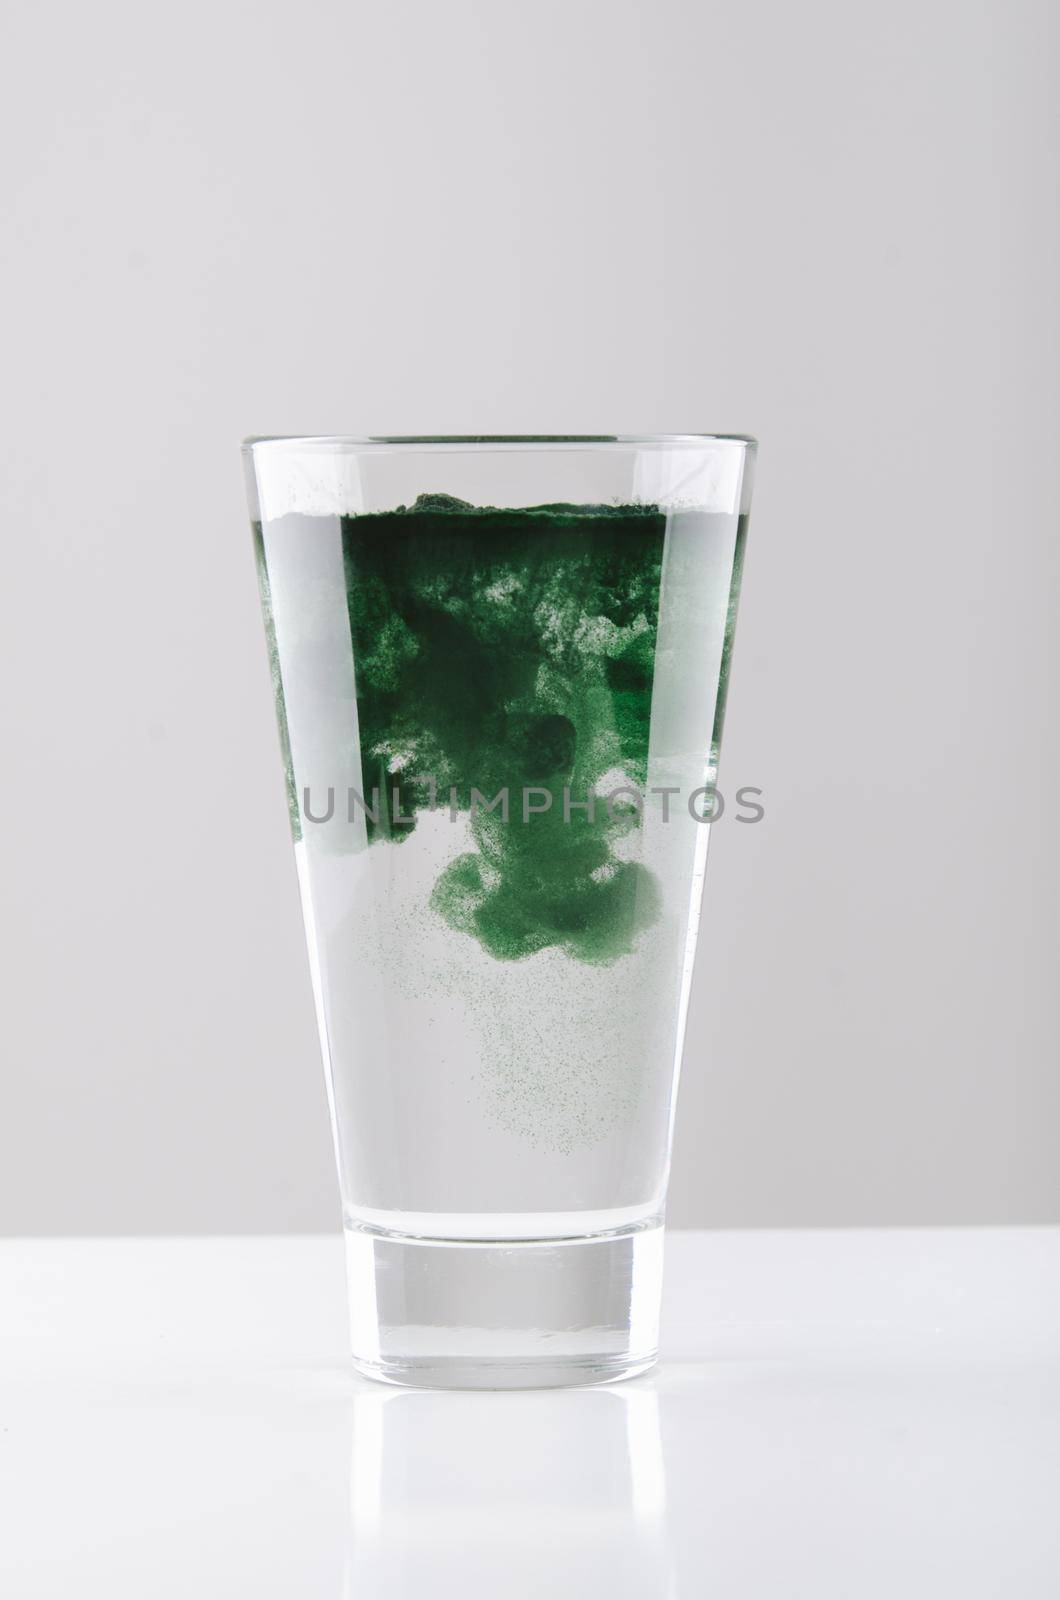 minimalist glass with water and spirulina powder. High quality photo